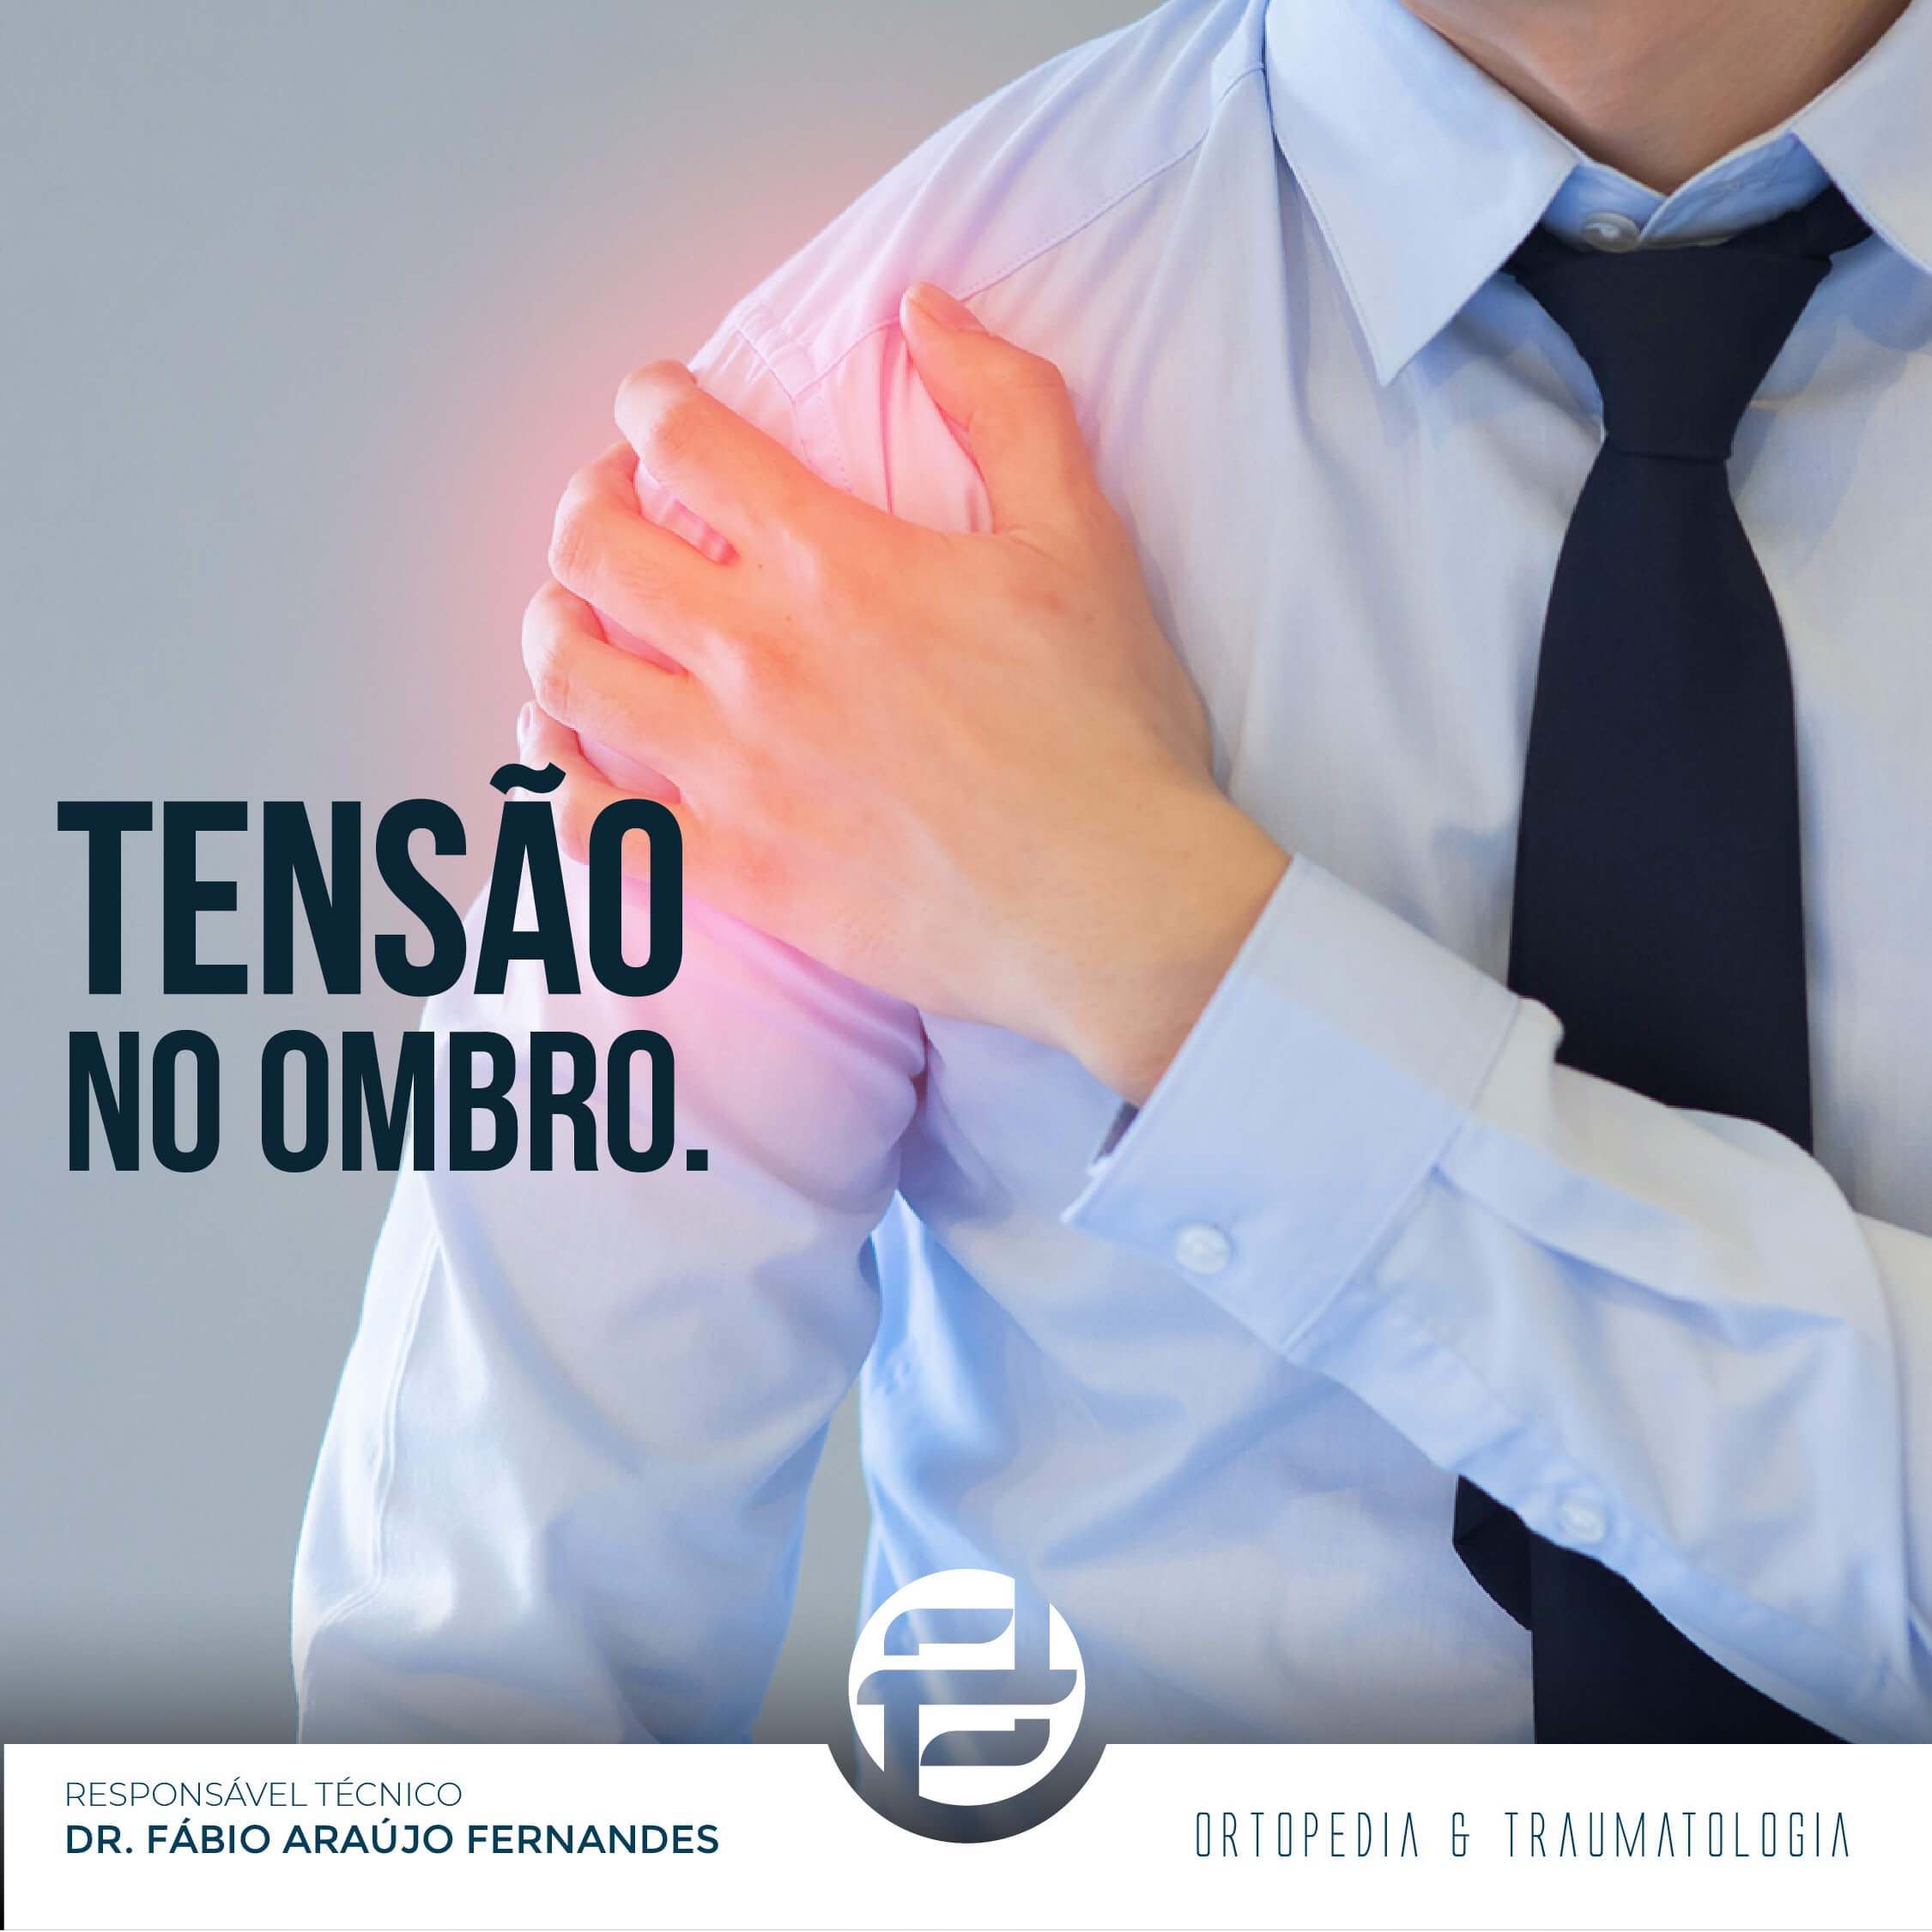 tensao-no-ombro-blog-dr-fabio-araujo-ortopedia-traumatologia-parana